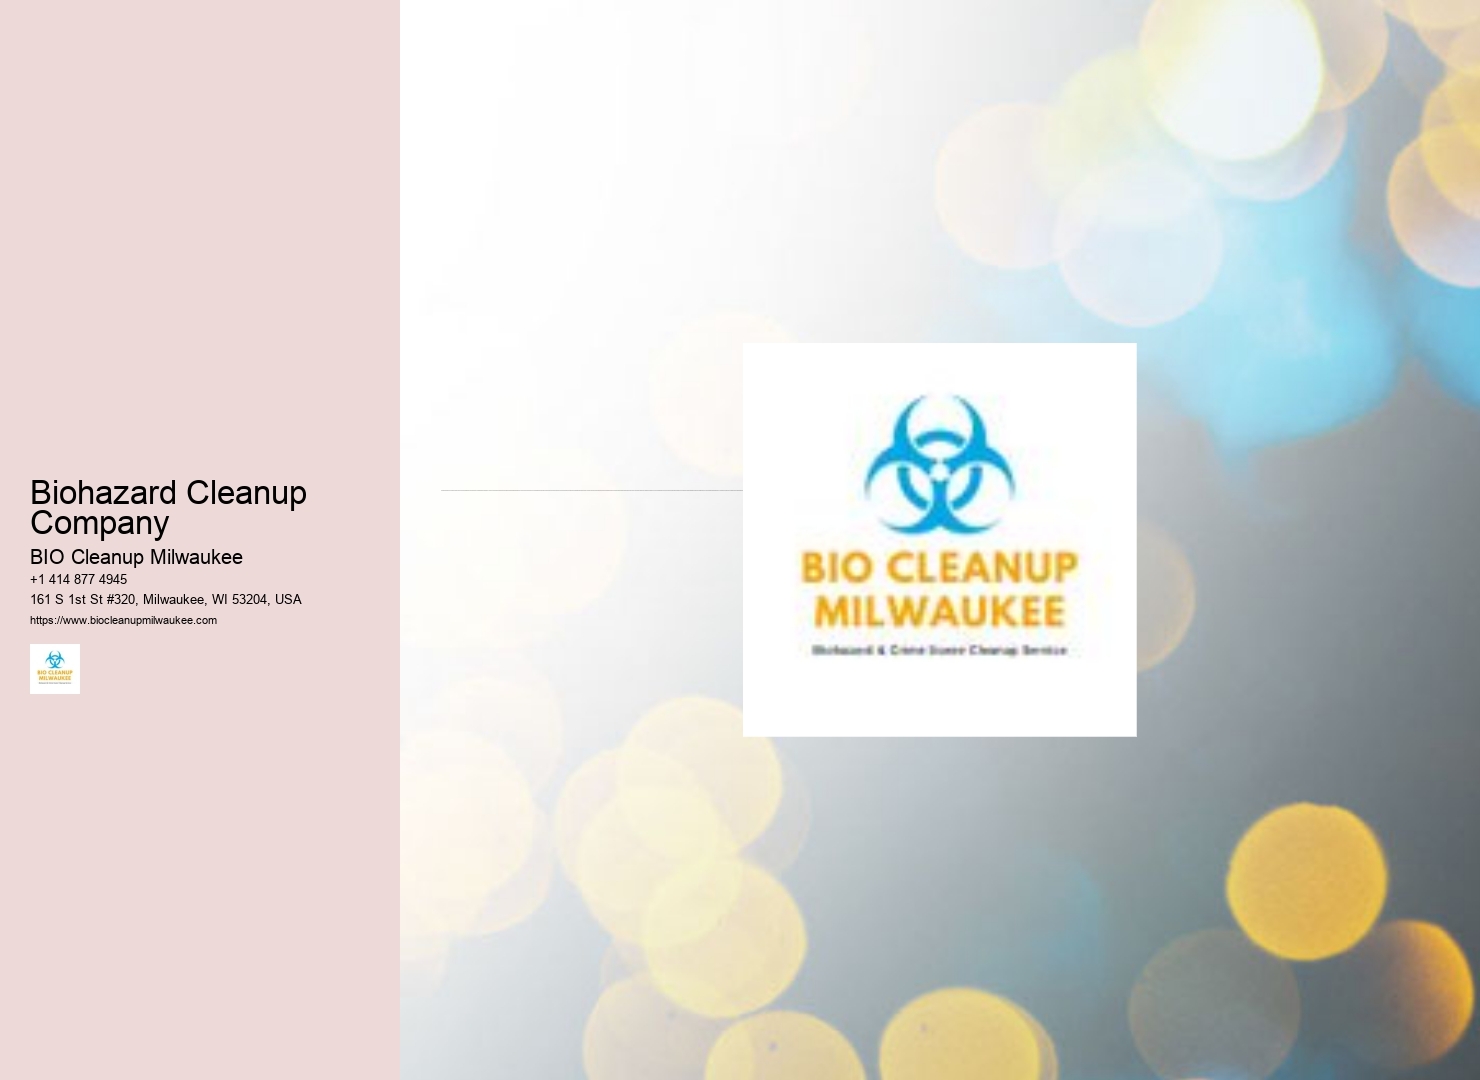 Biohazard Cleanup Company